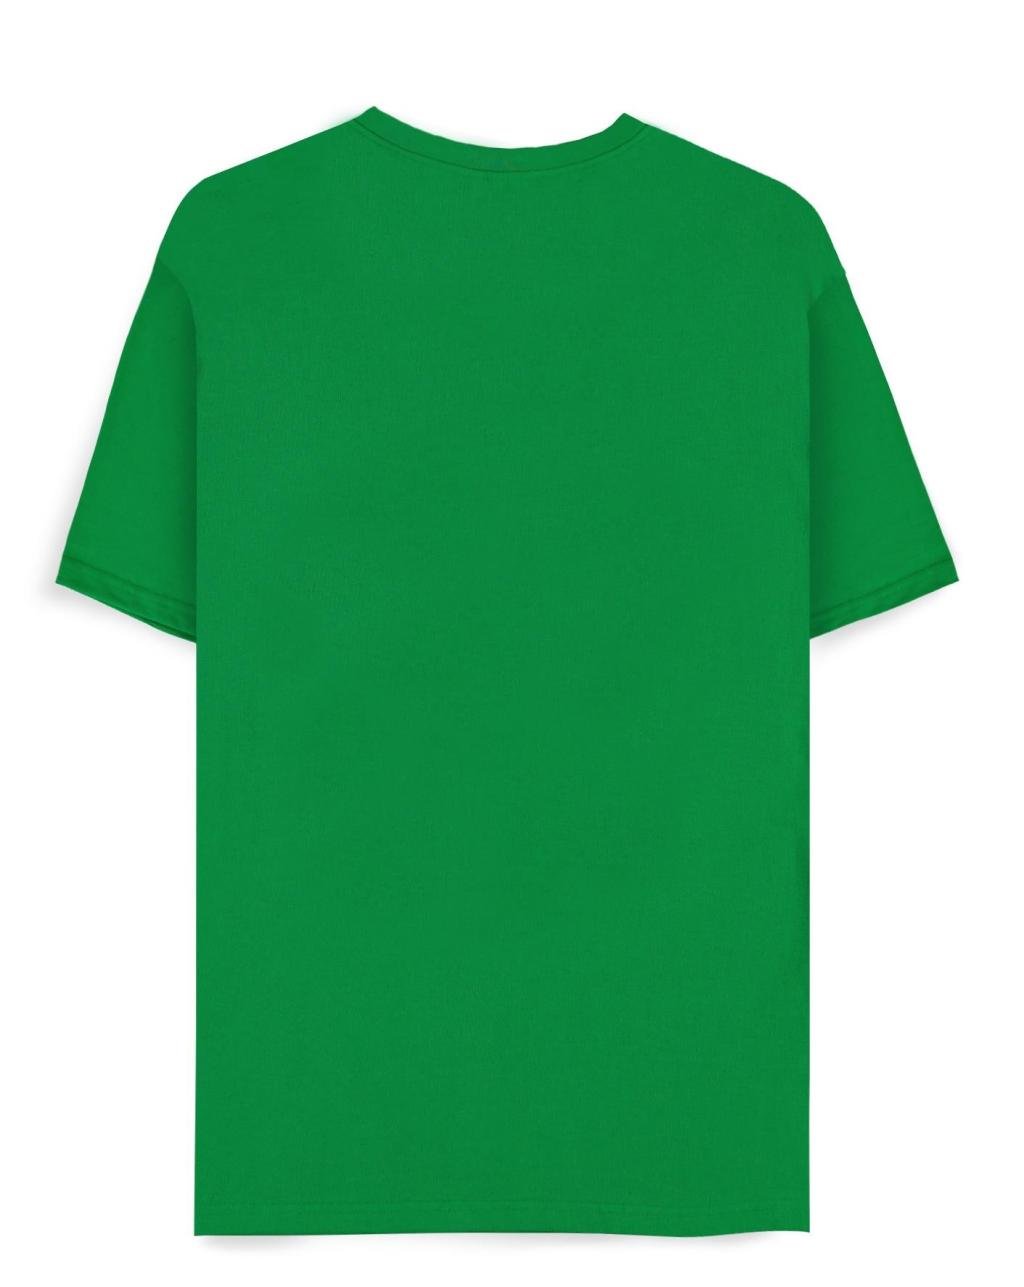 POKEMON - Venusaur - Men's T-shirt (XL)